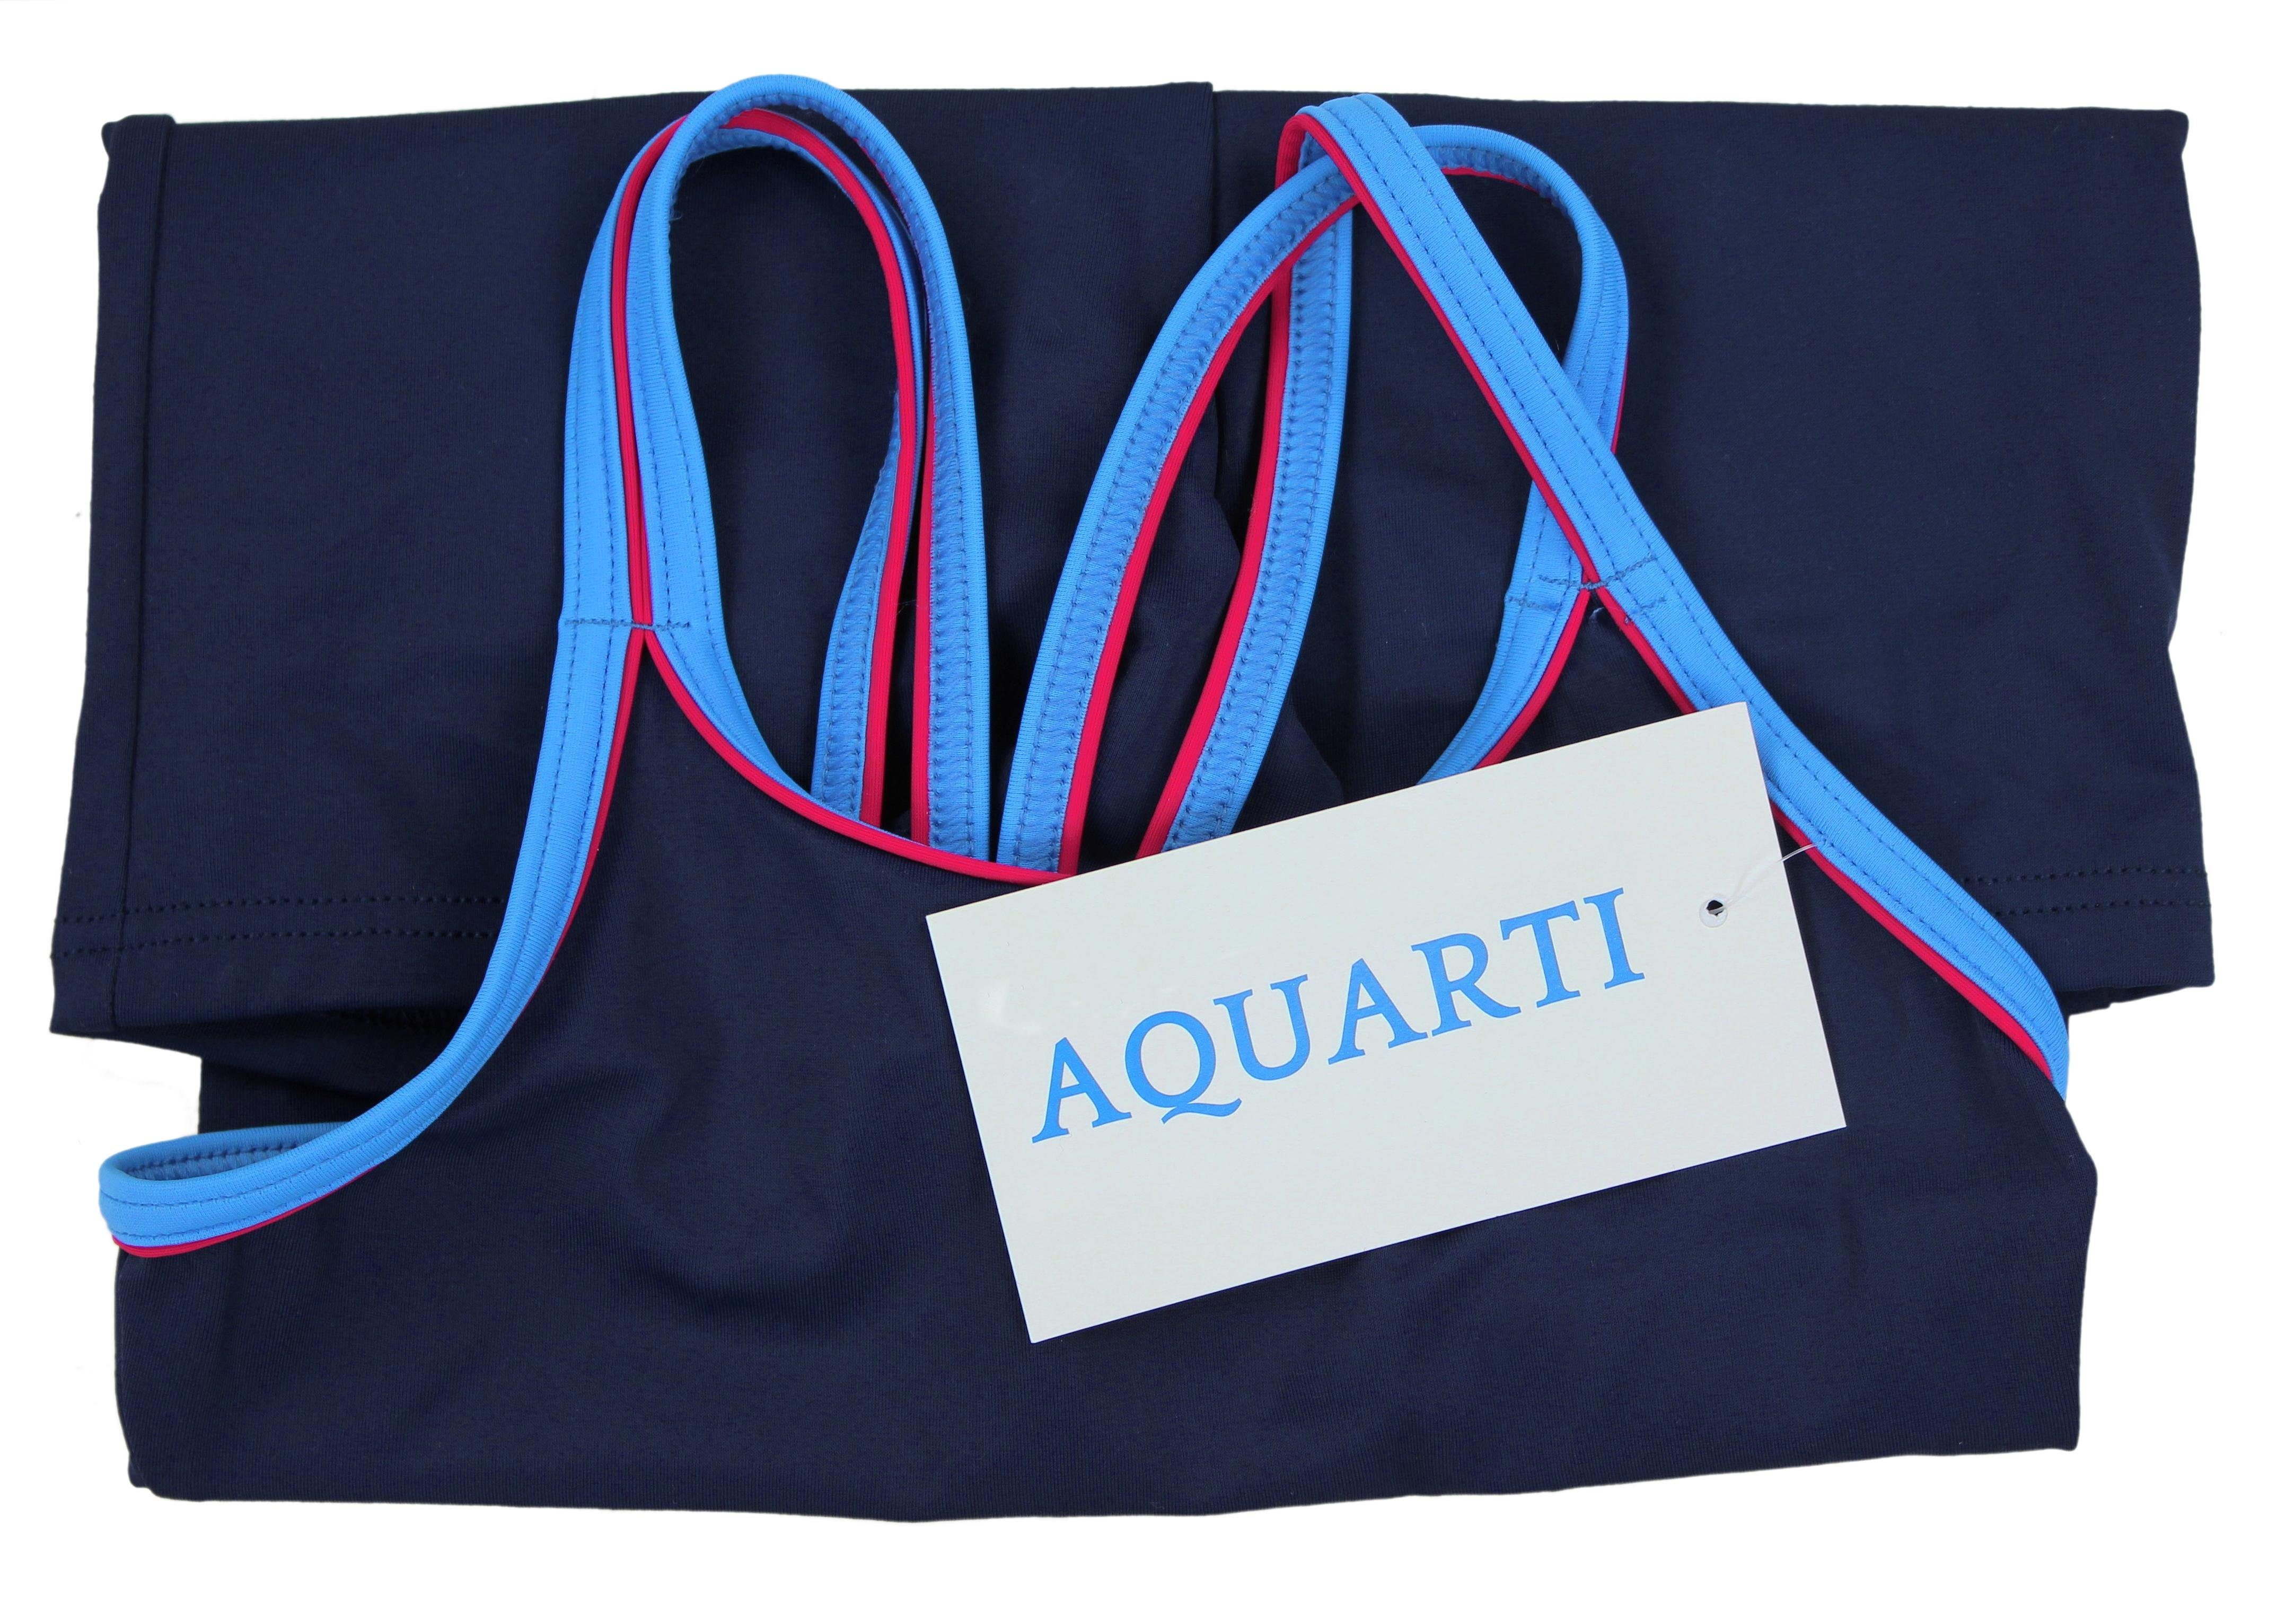 Aquarti Badeanzug Aquarti Mädchen Badeanzug Racerback Bein Blau Dunkelblau / mit